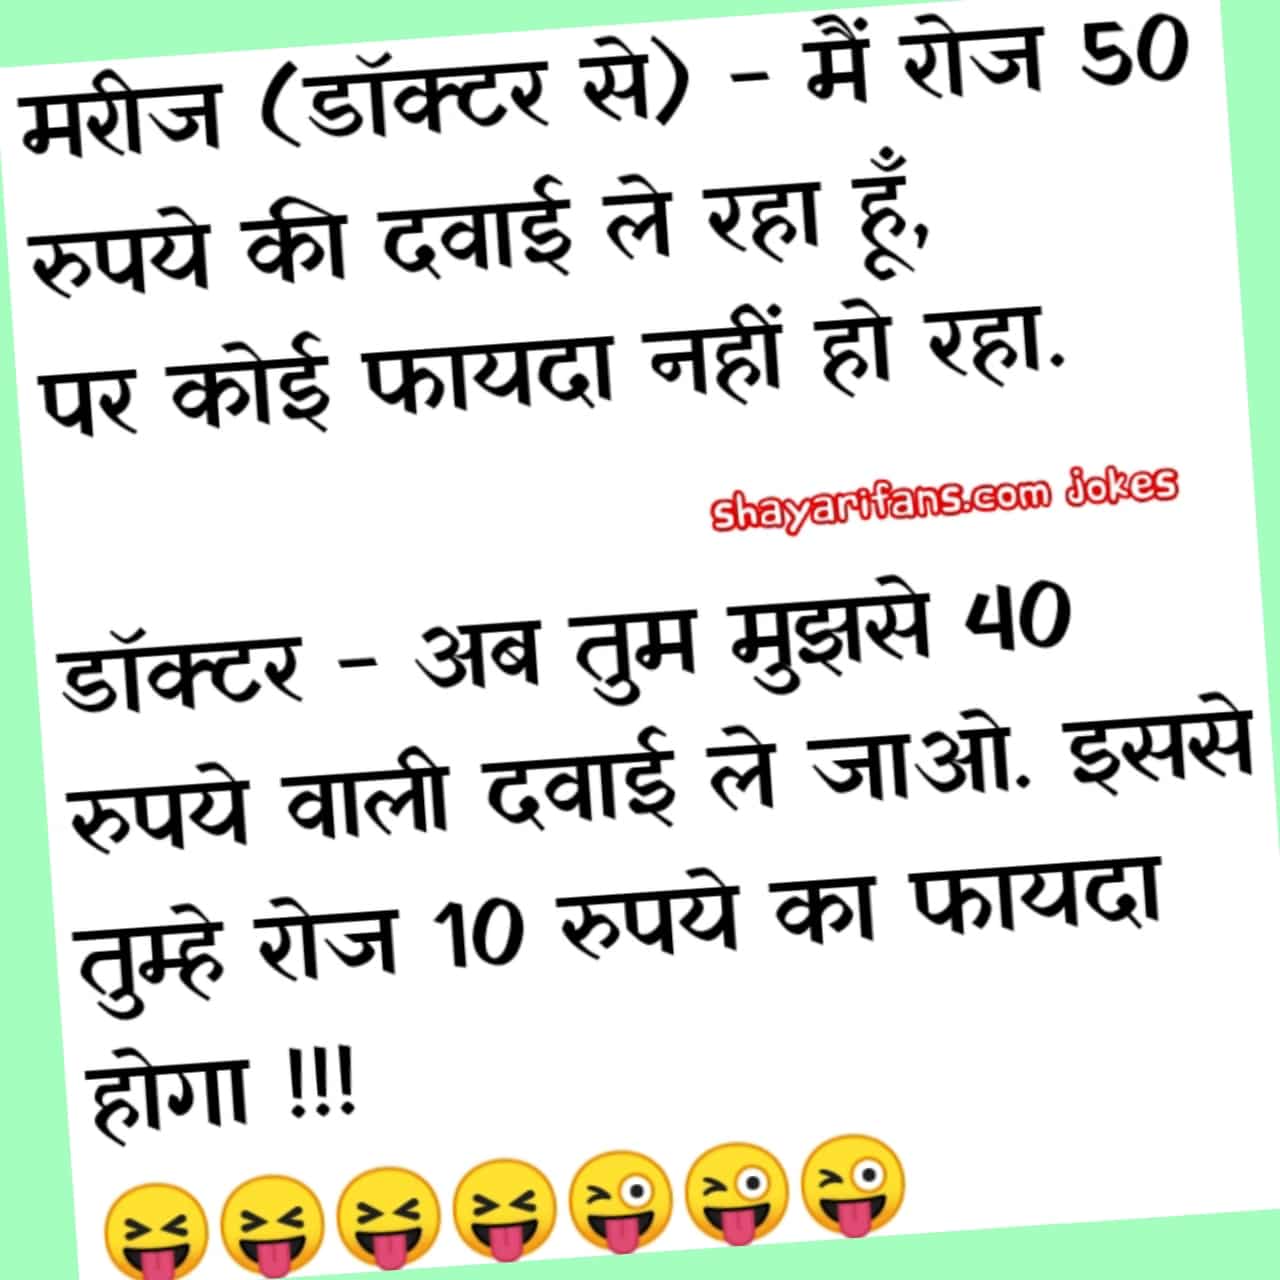 Jokes in hindi for whatsapp Part 4 | Jokes in hindi for whatsapp ...